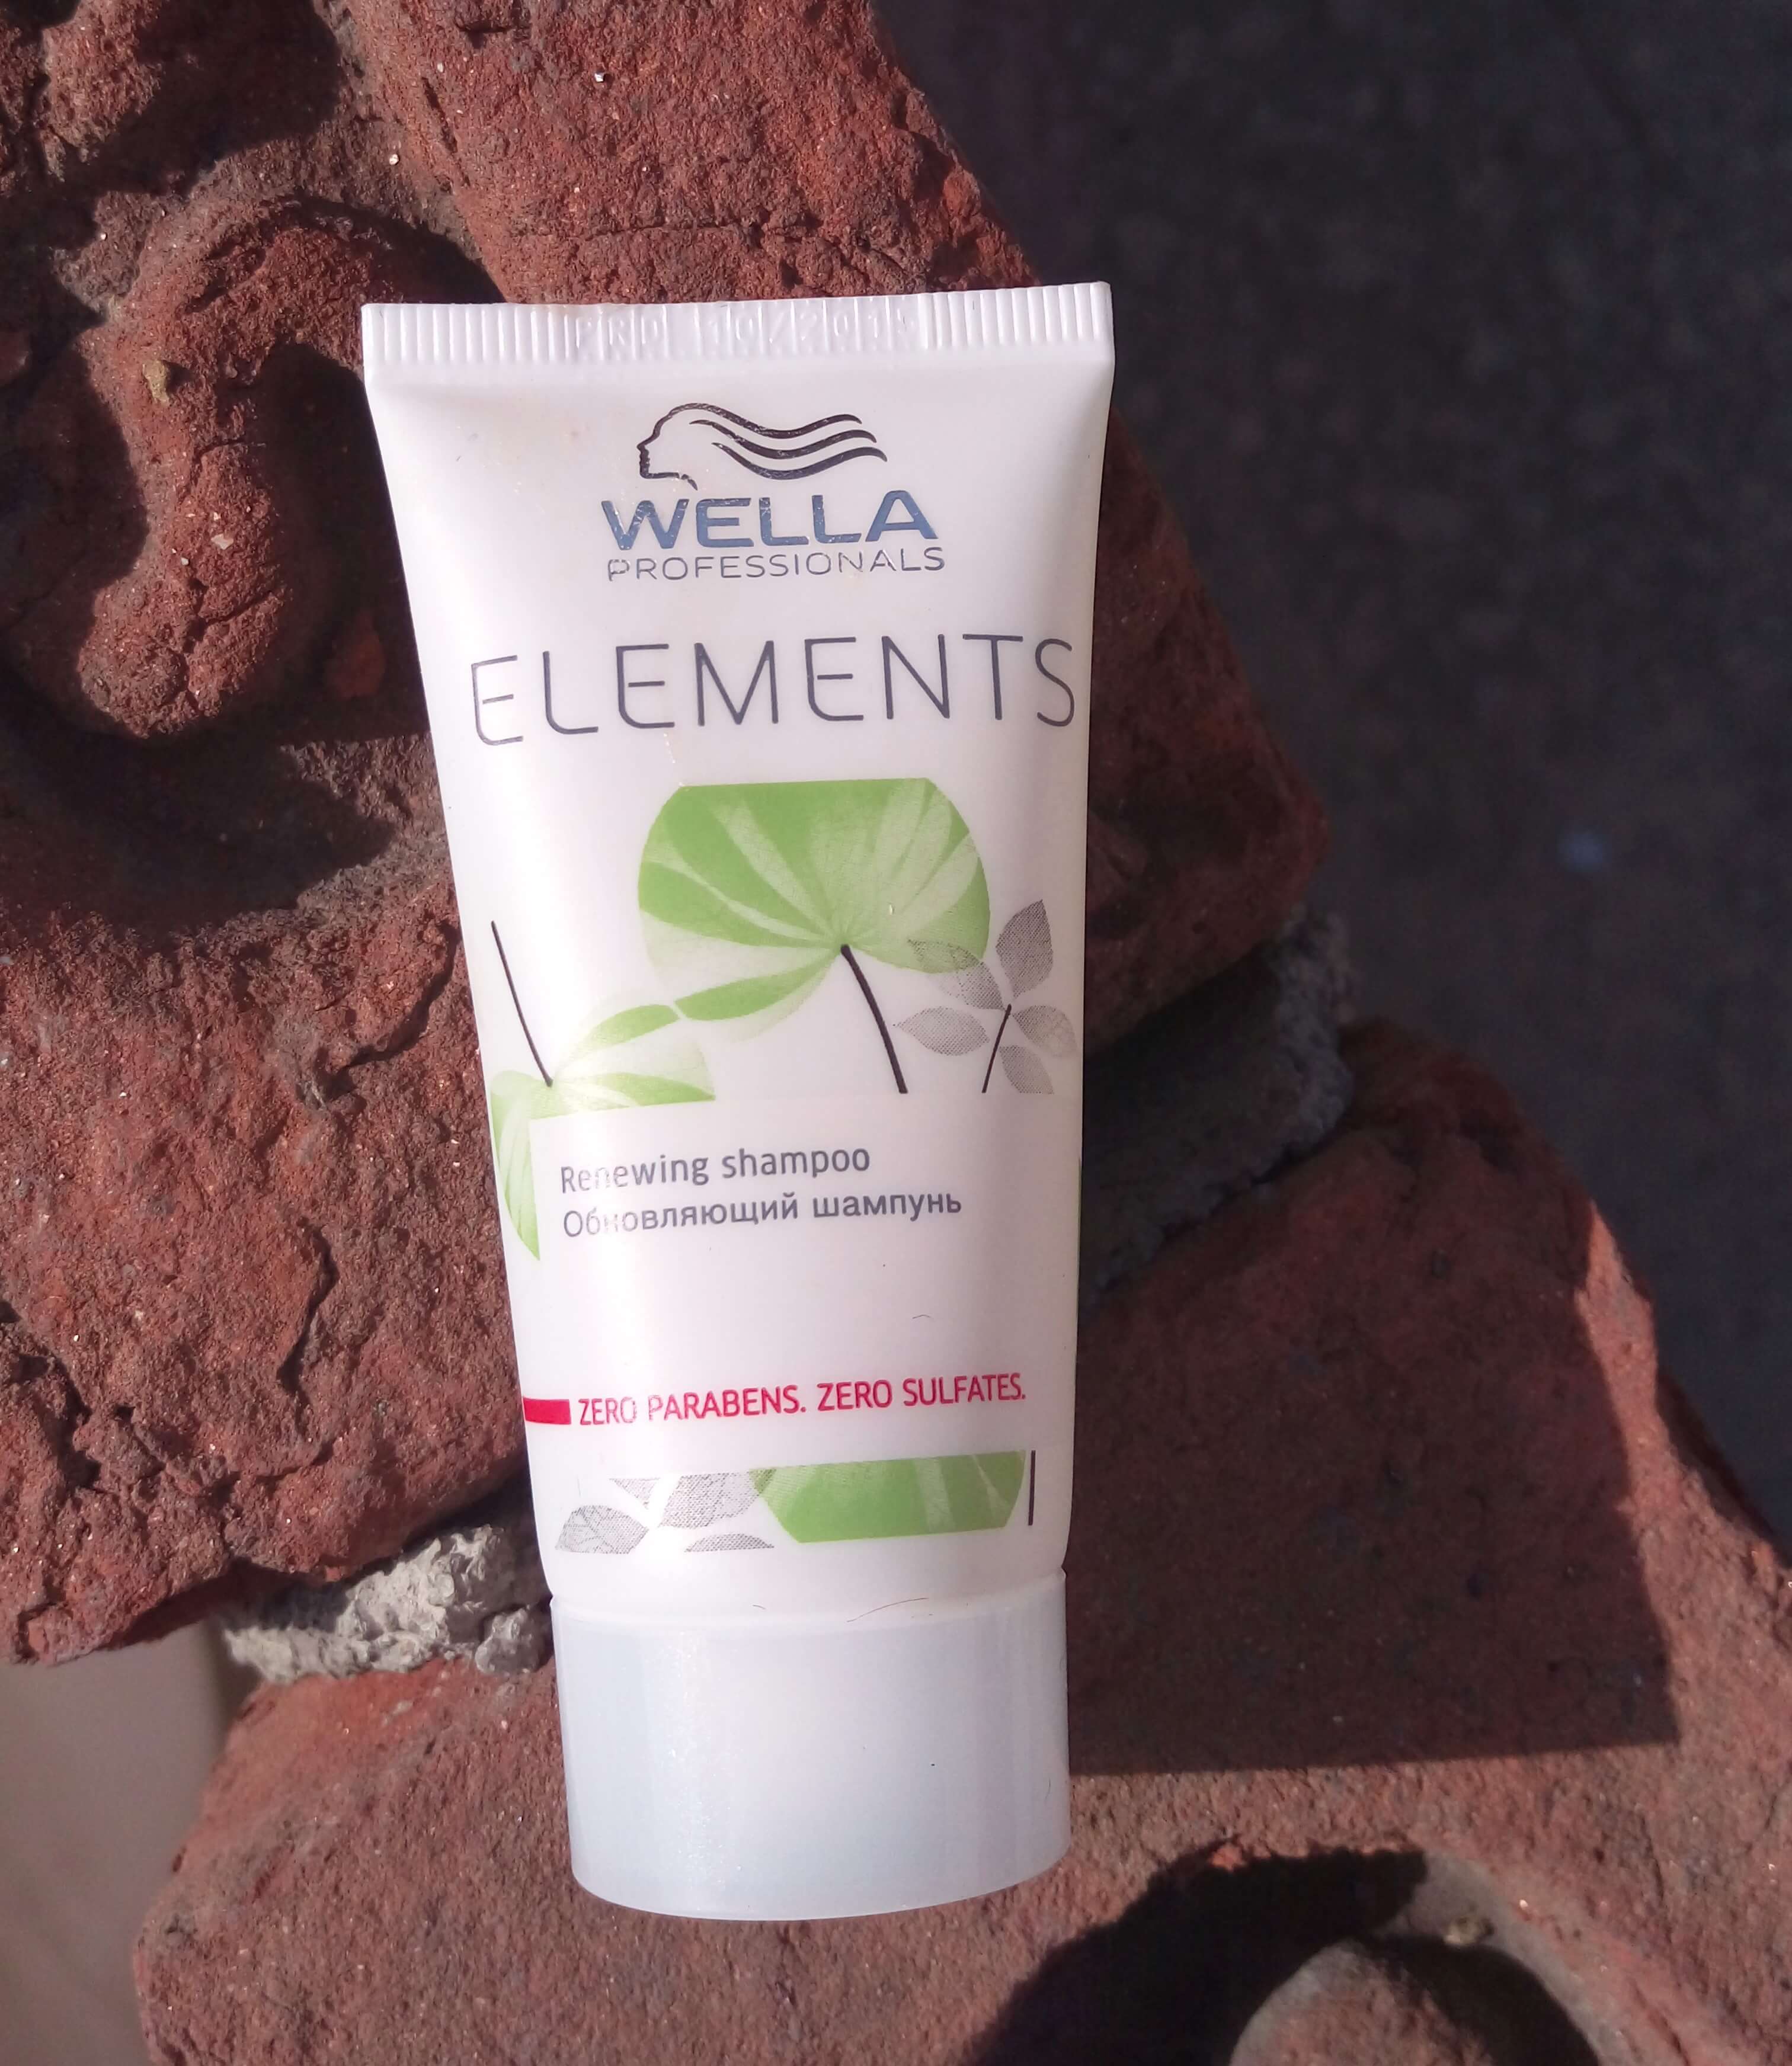 Wella Professionals Elements Renewing Shampoo Review